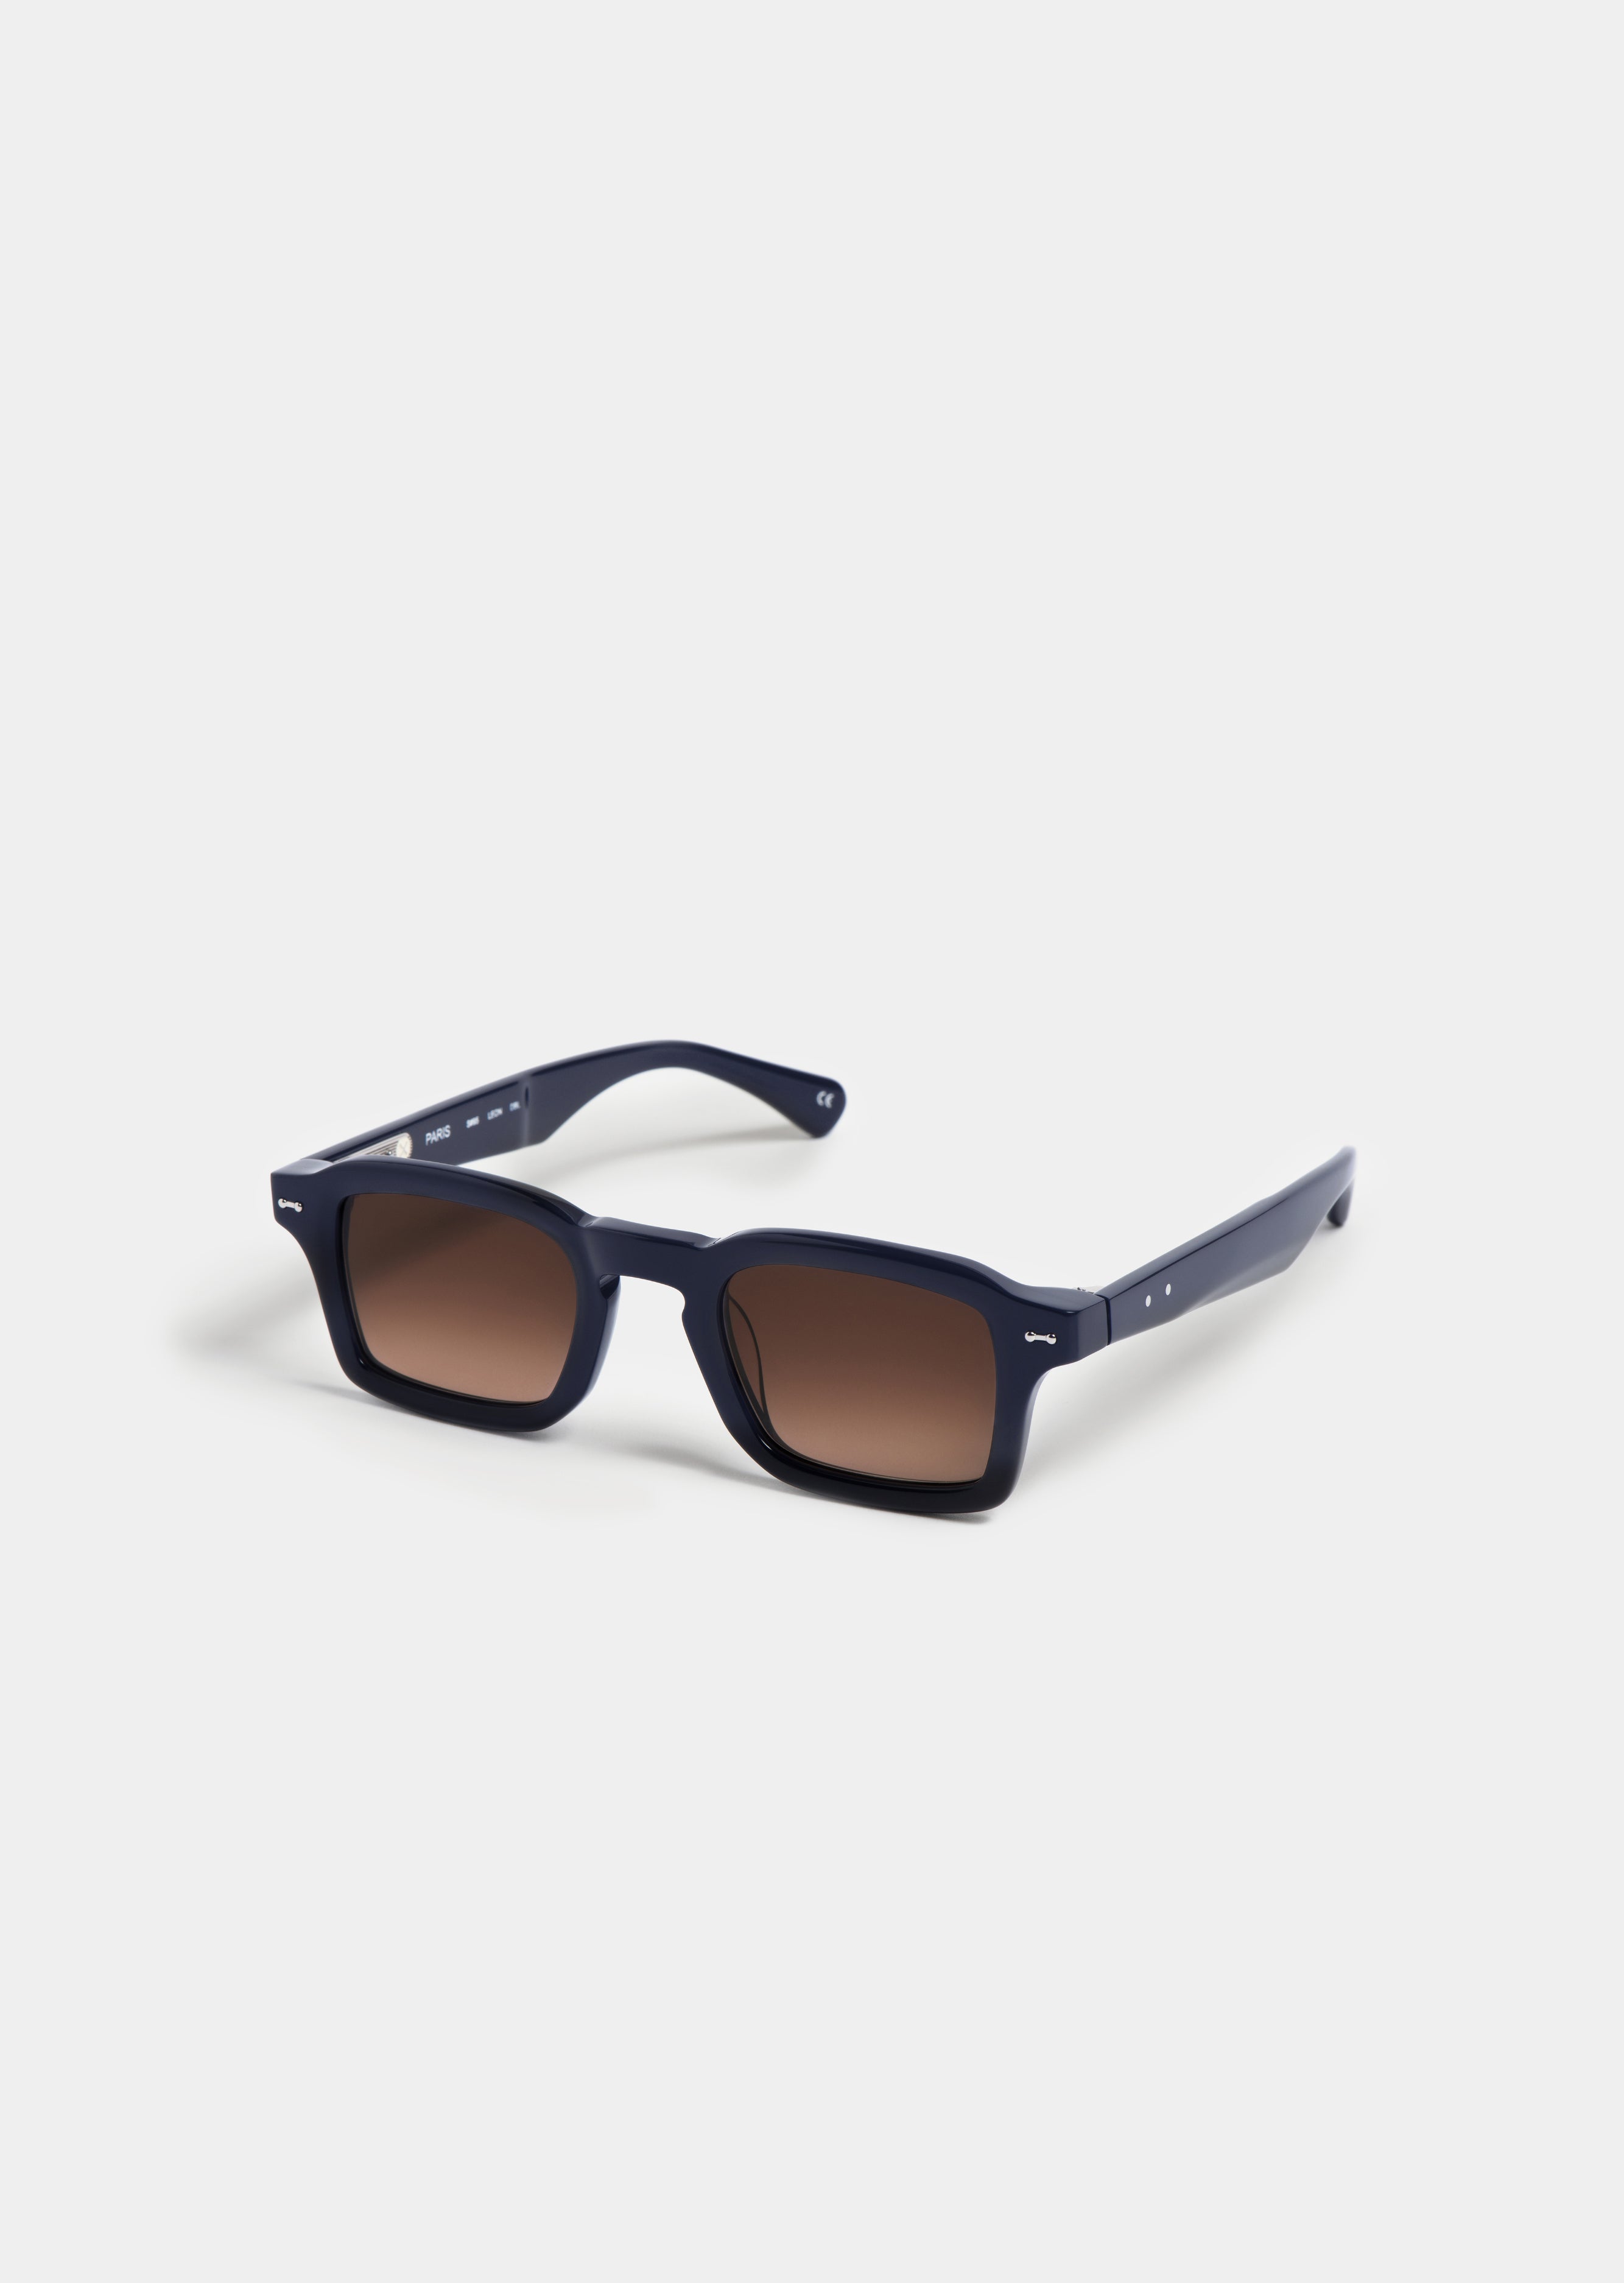 Le Specs PLANKTON - Sunglasses - deep blue/blue-grey - Zalando.de